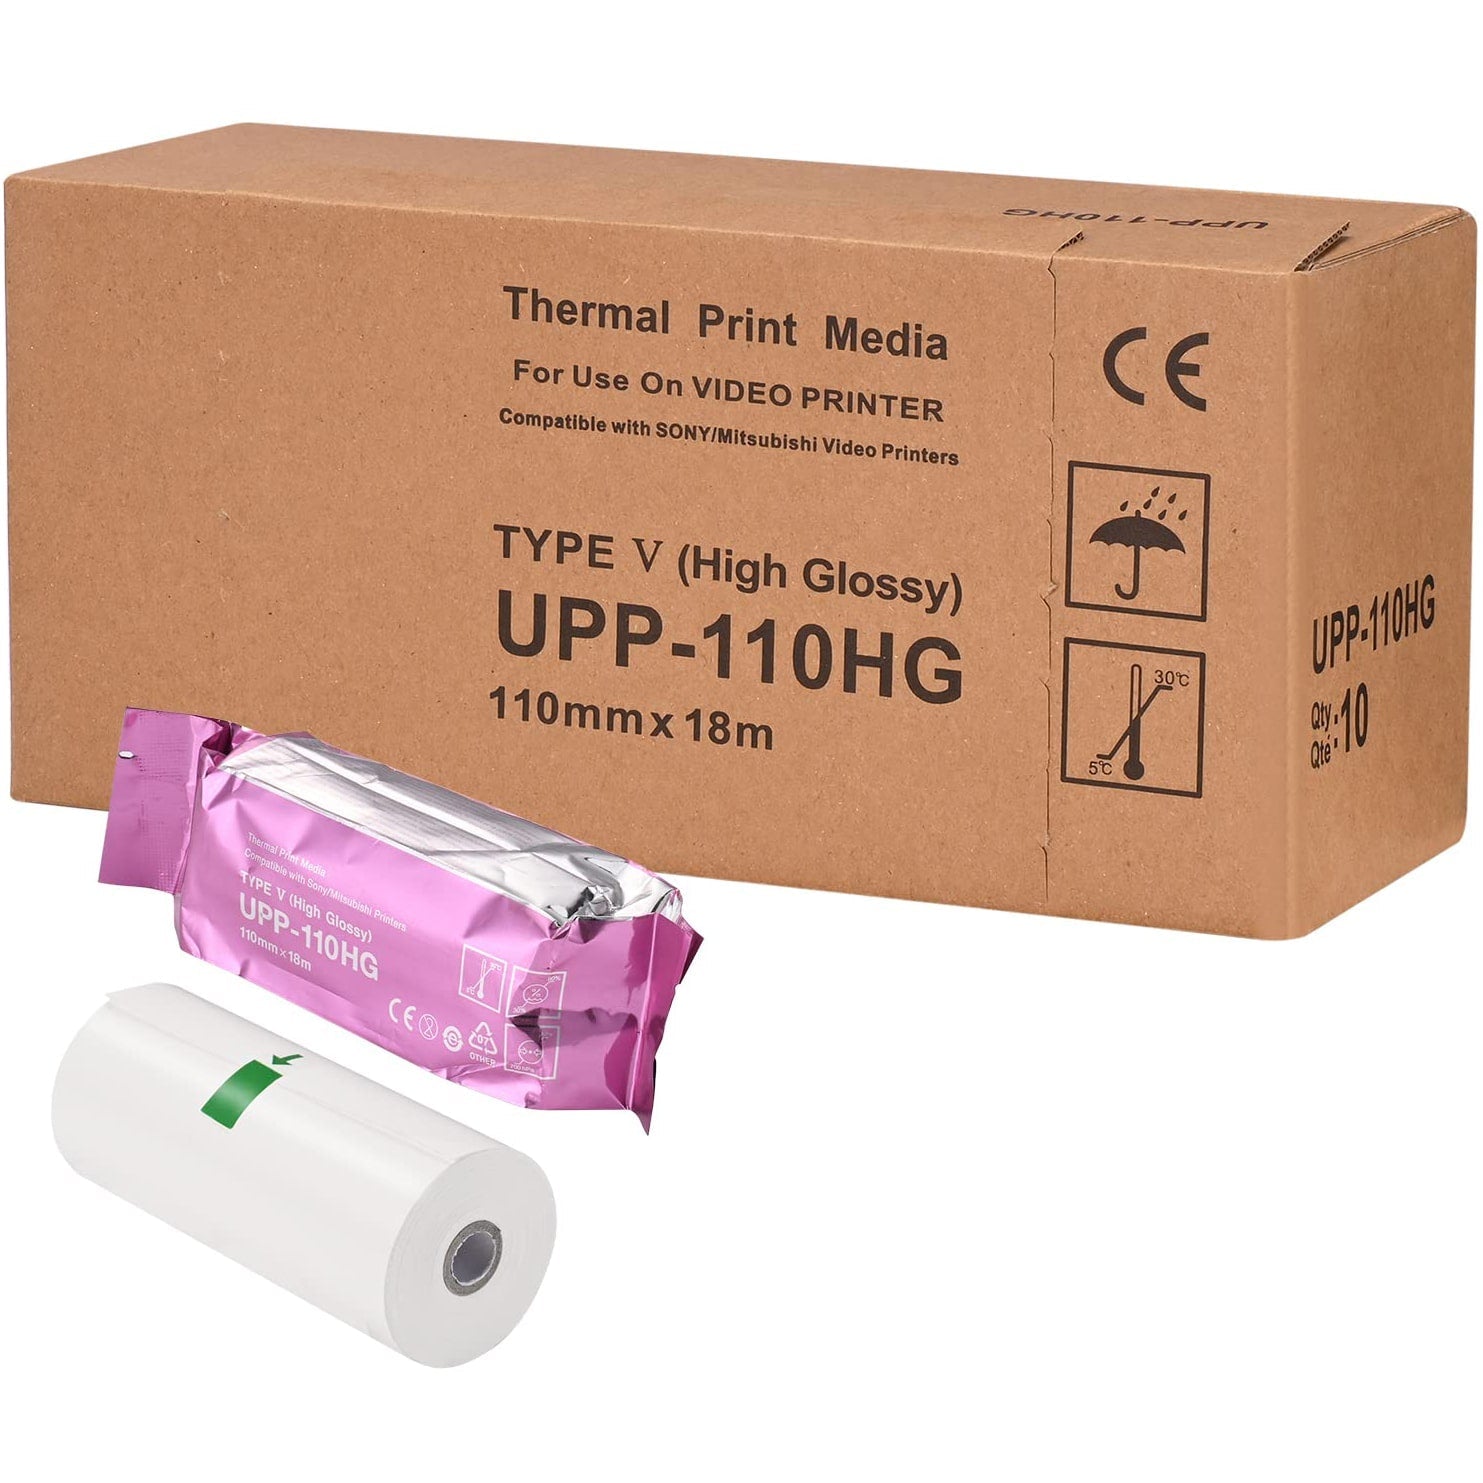 Sony UPP-110HG High Glossy Thermal Print Media